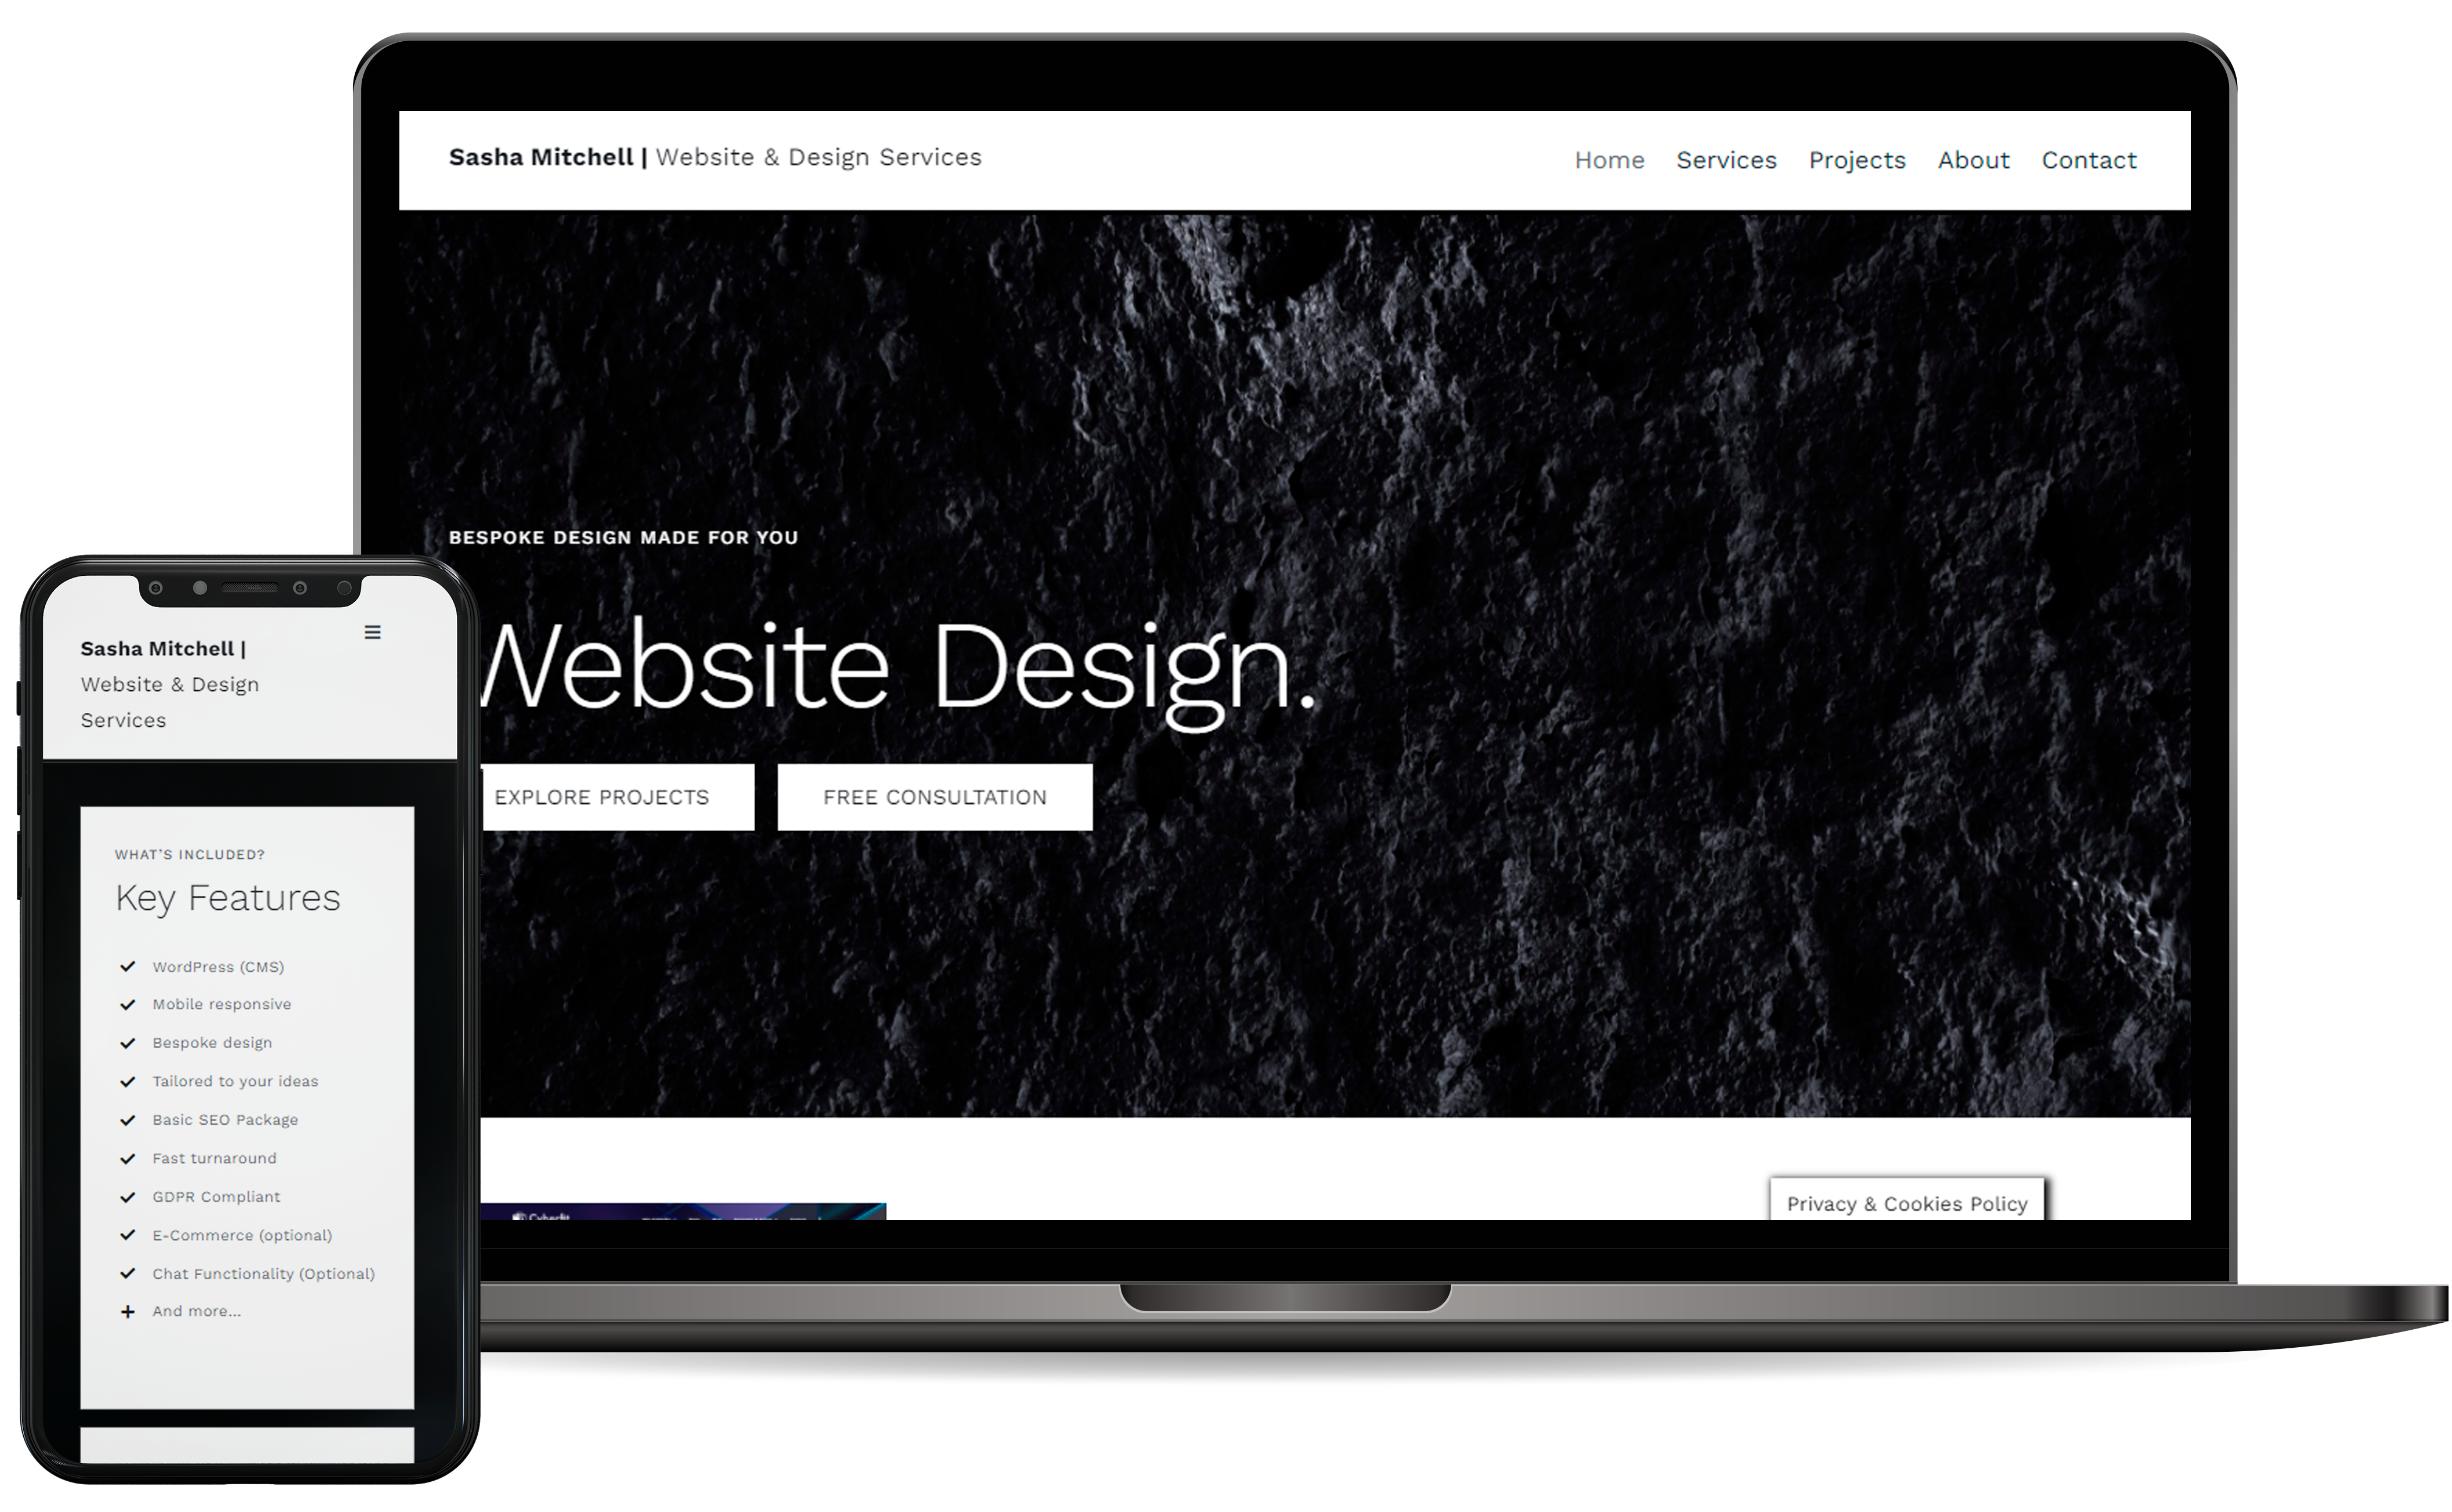 Sasha Mitchell Website and Design Services website